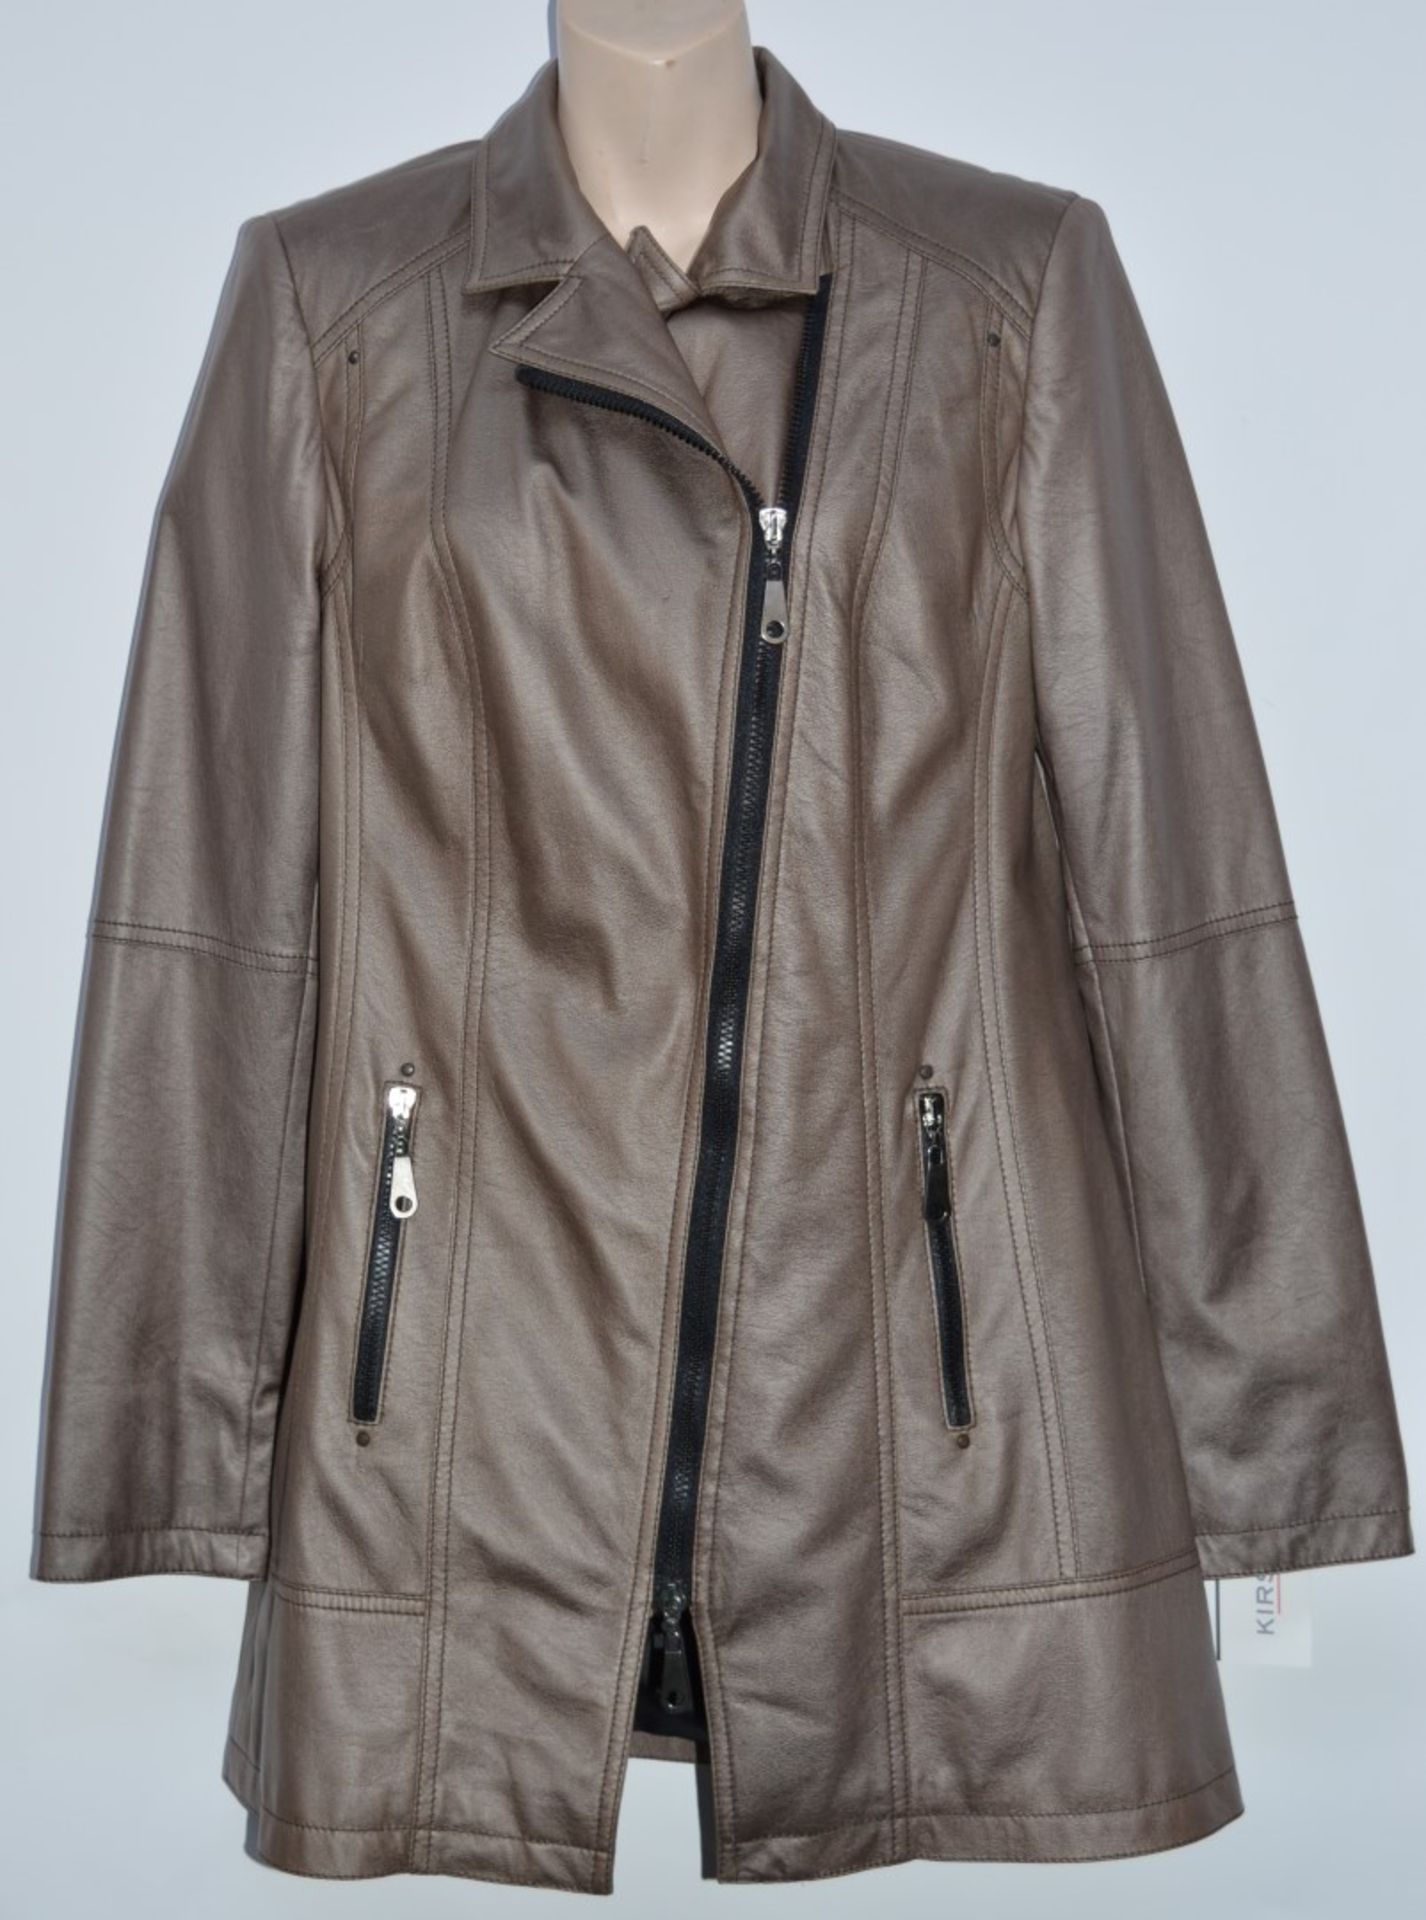 1 x Steilmann KSTN By Kirsten Womens Faux Leather Coat - Functional Pockets - Zip Fastener - UK Size